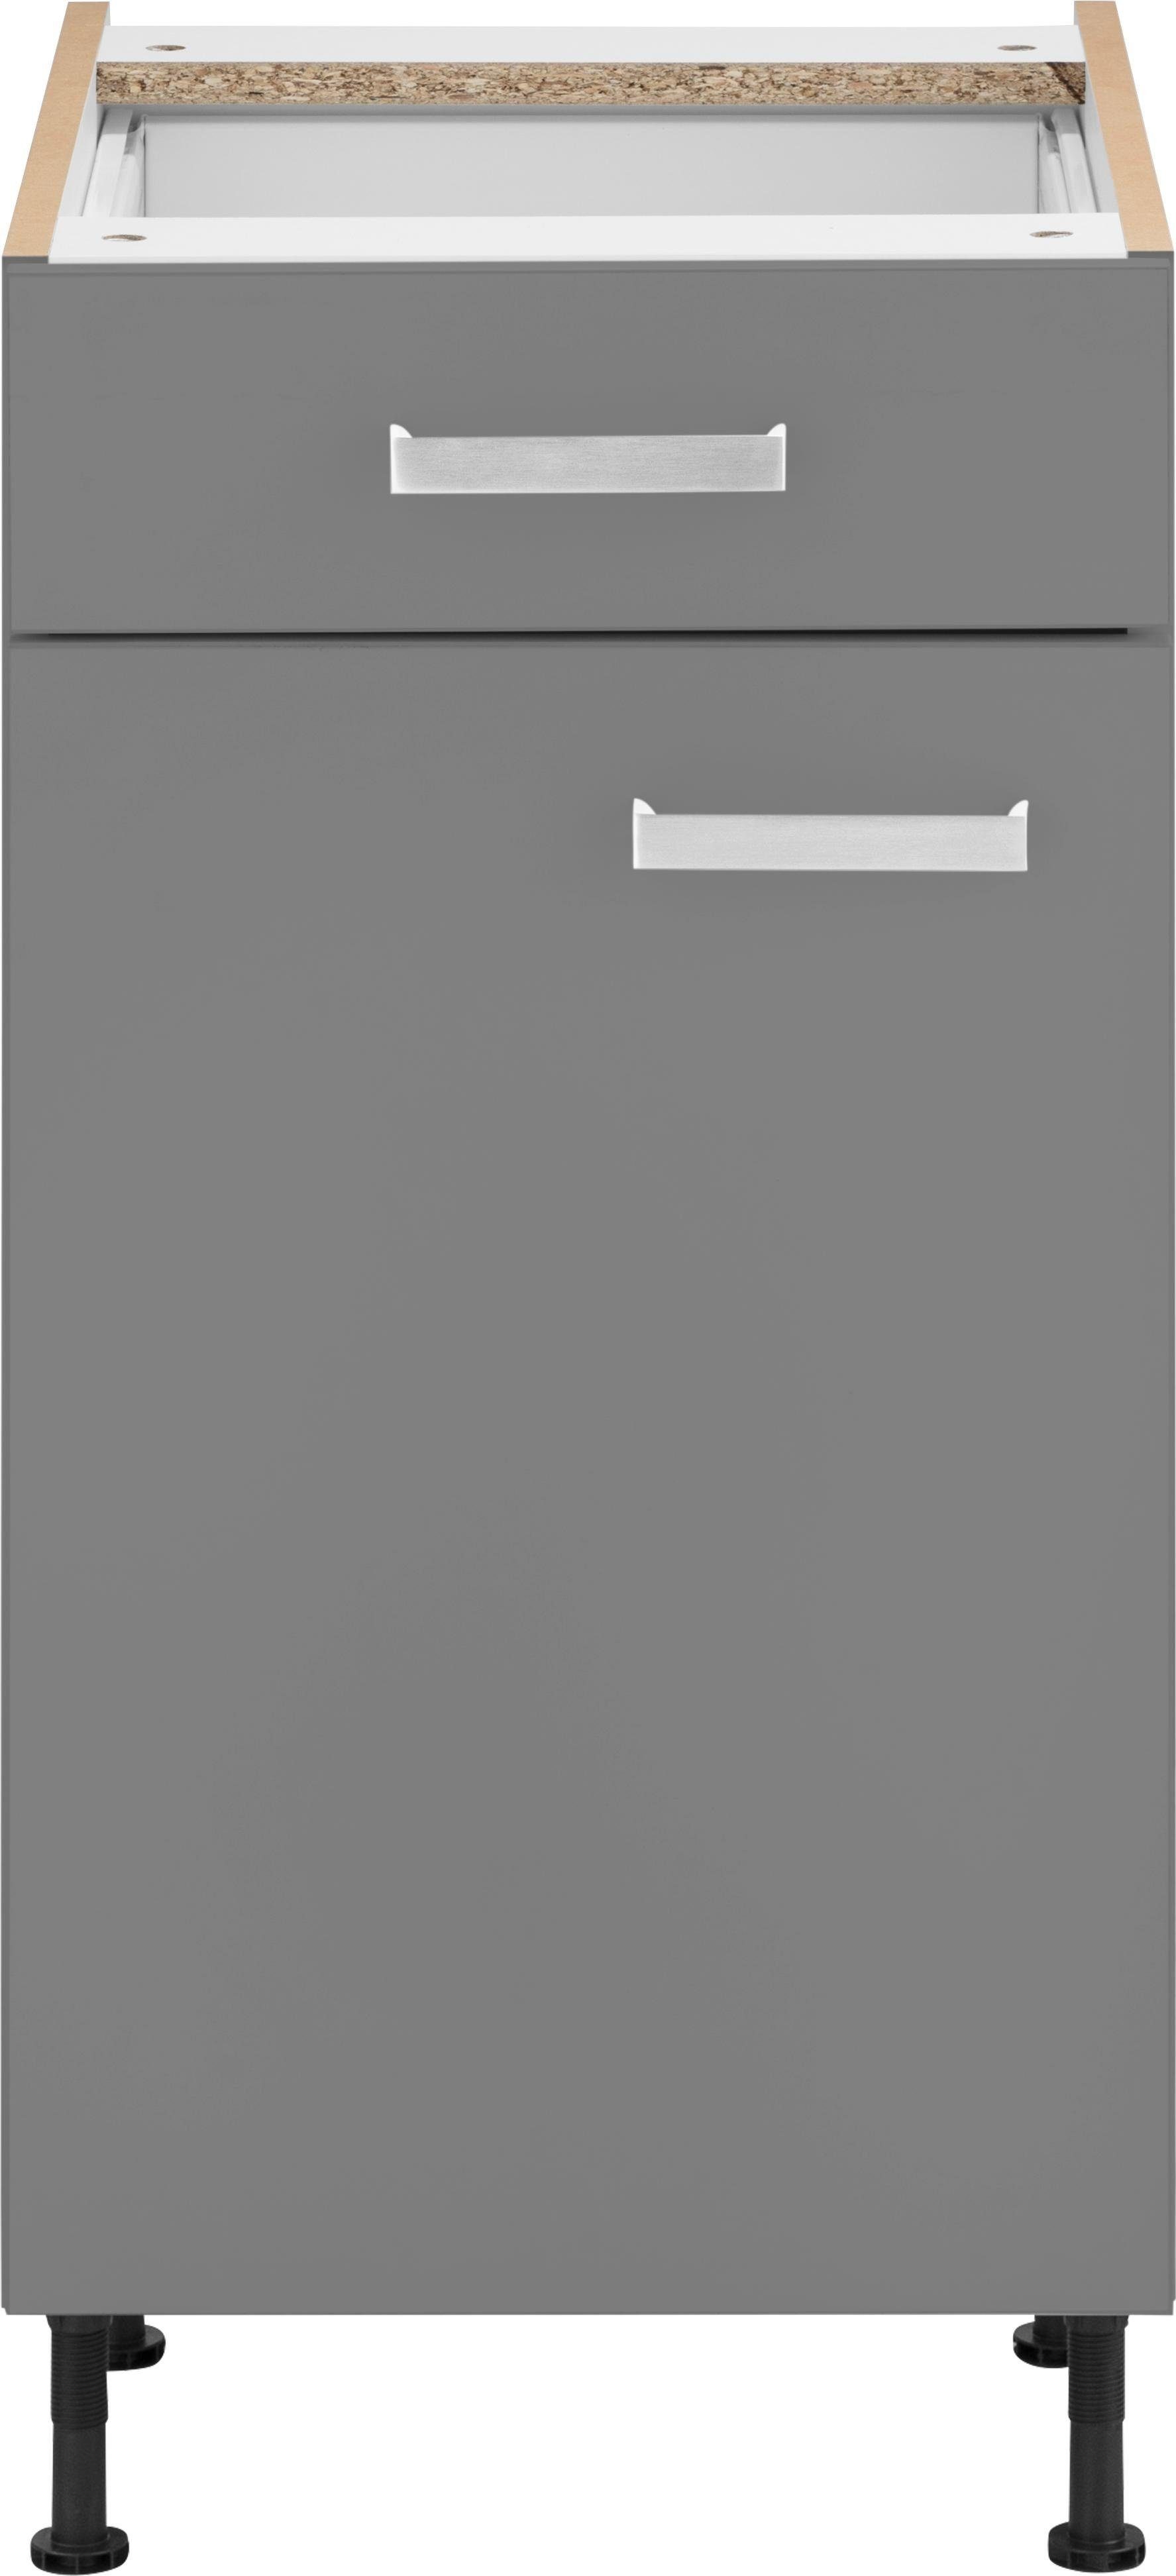 basaltgrau Unterschrank cm 40 OPTIFIT | Parma basaltgrau Breite